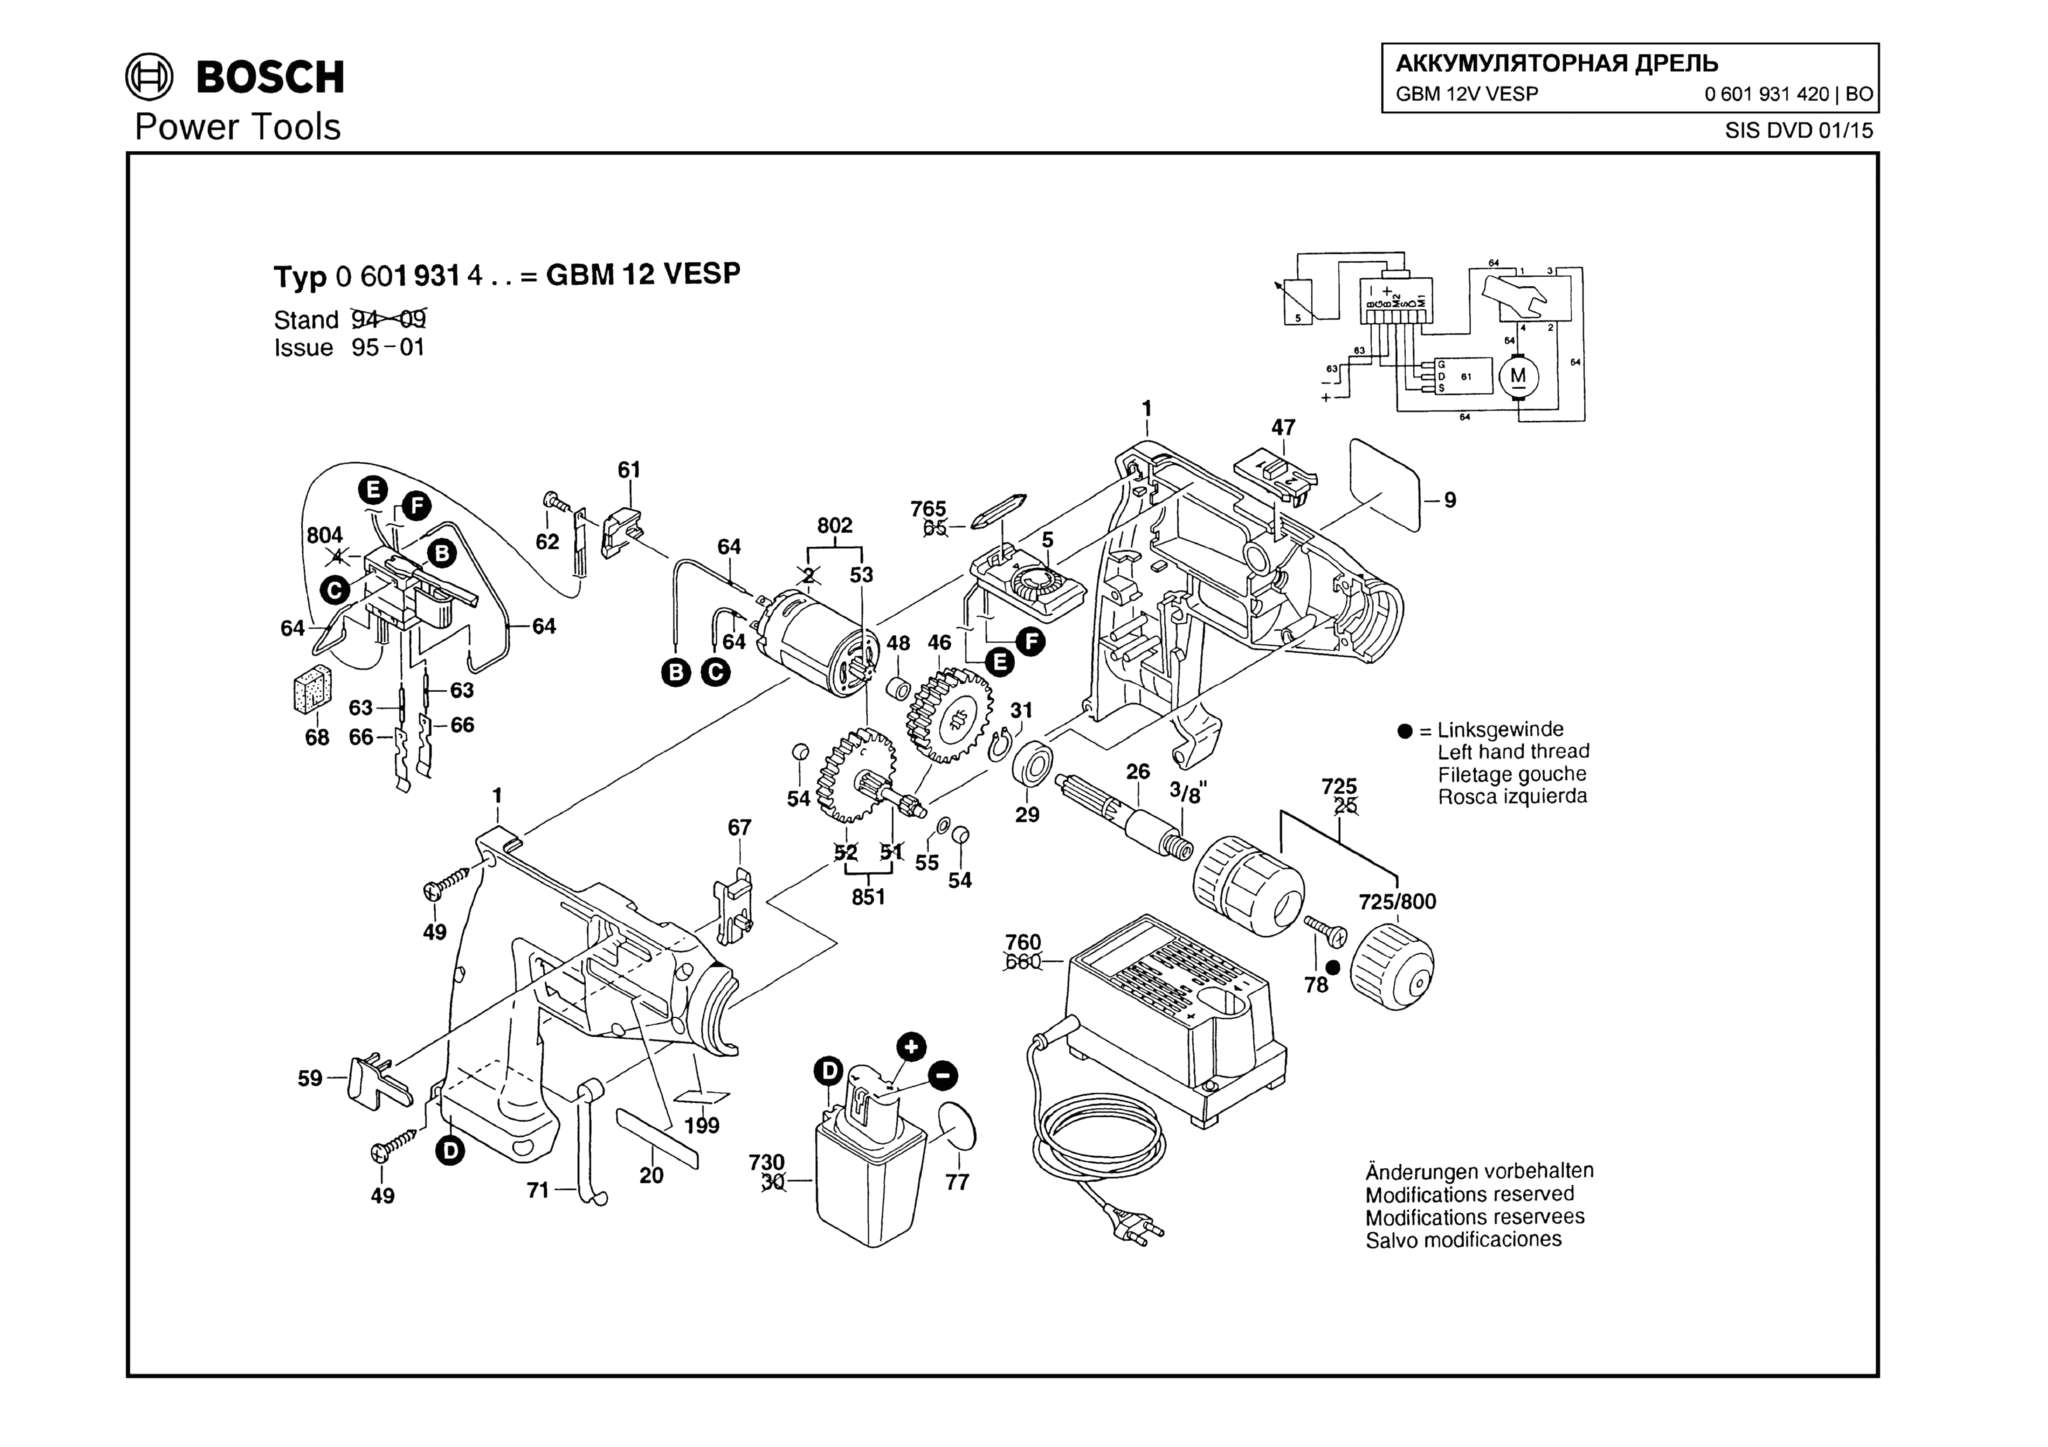 Запчасти, схема и деталировка Bosch GBM 12V VESP (ТИП 0601931420)